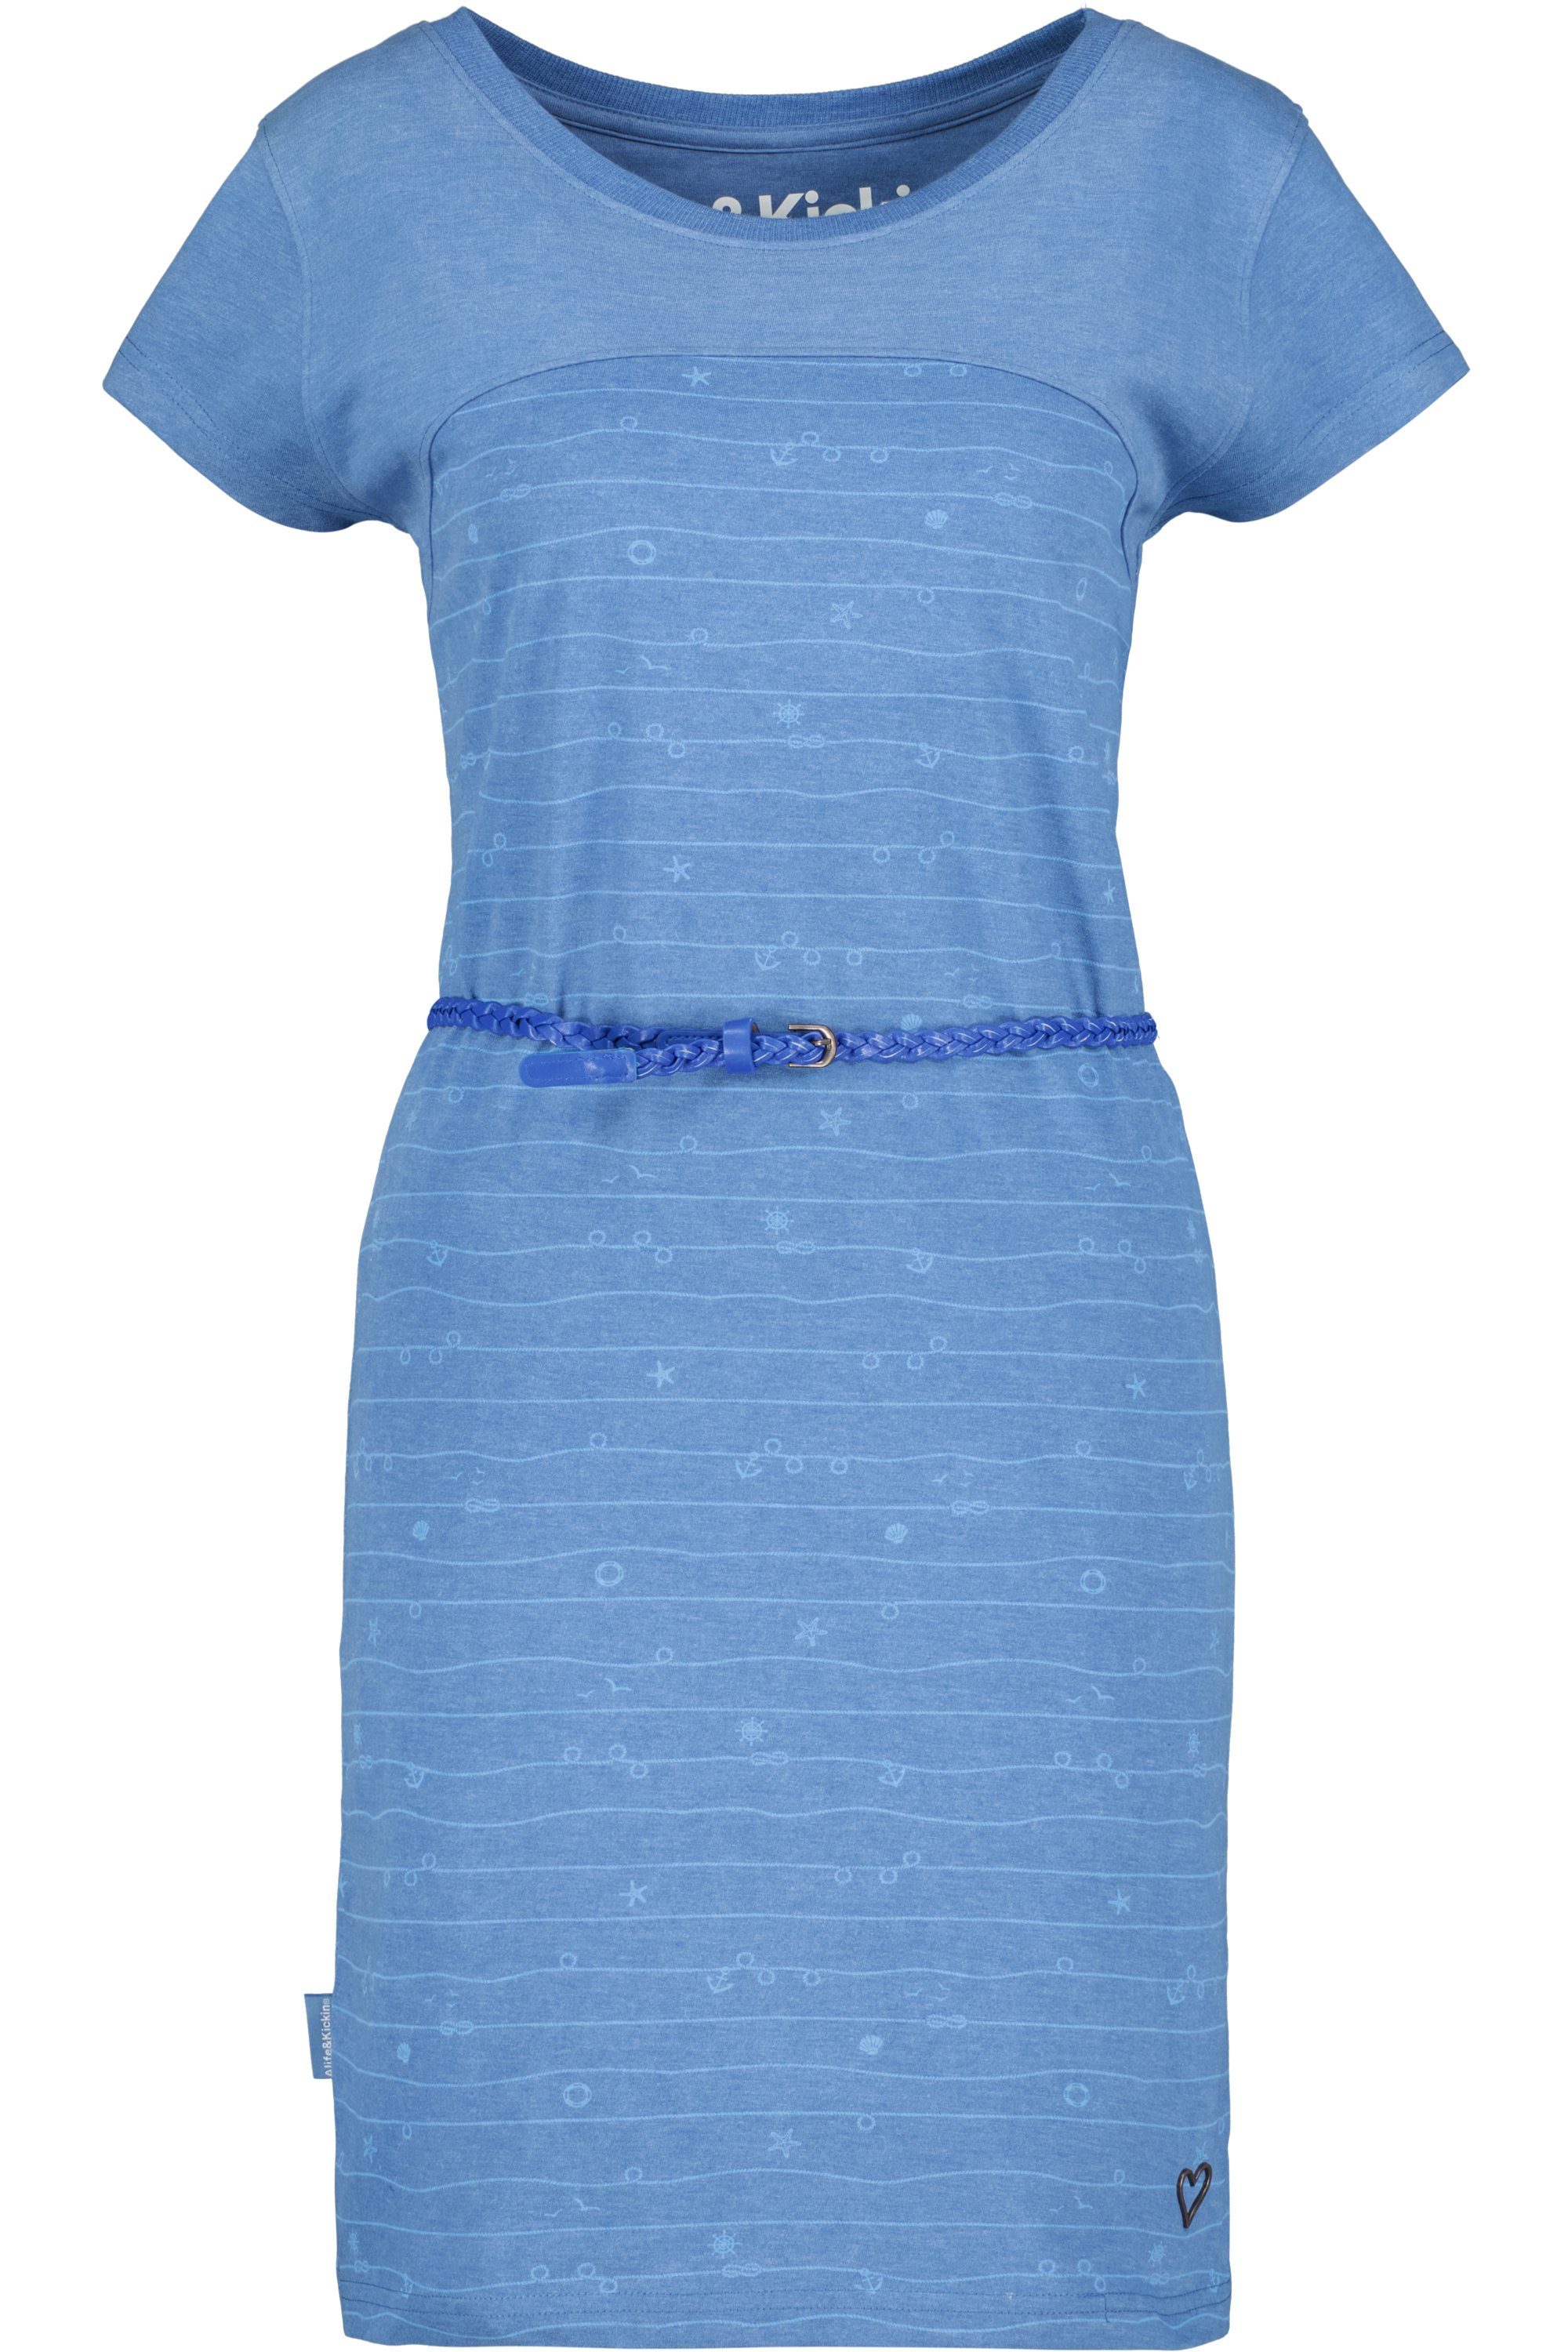 Alife & Kickin Kleid Dress cobalt Damen Sommerkleid, ClariceAK Blusenkleid